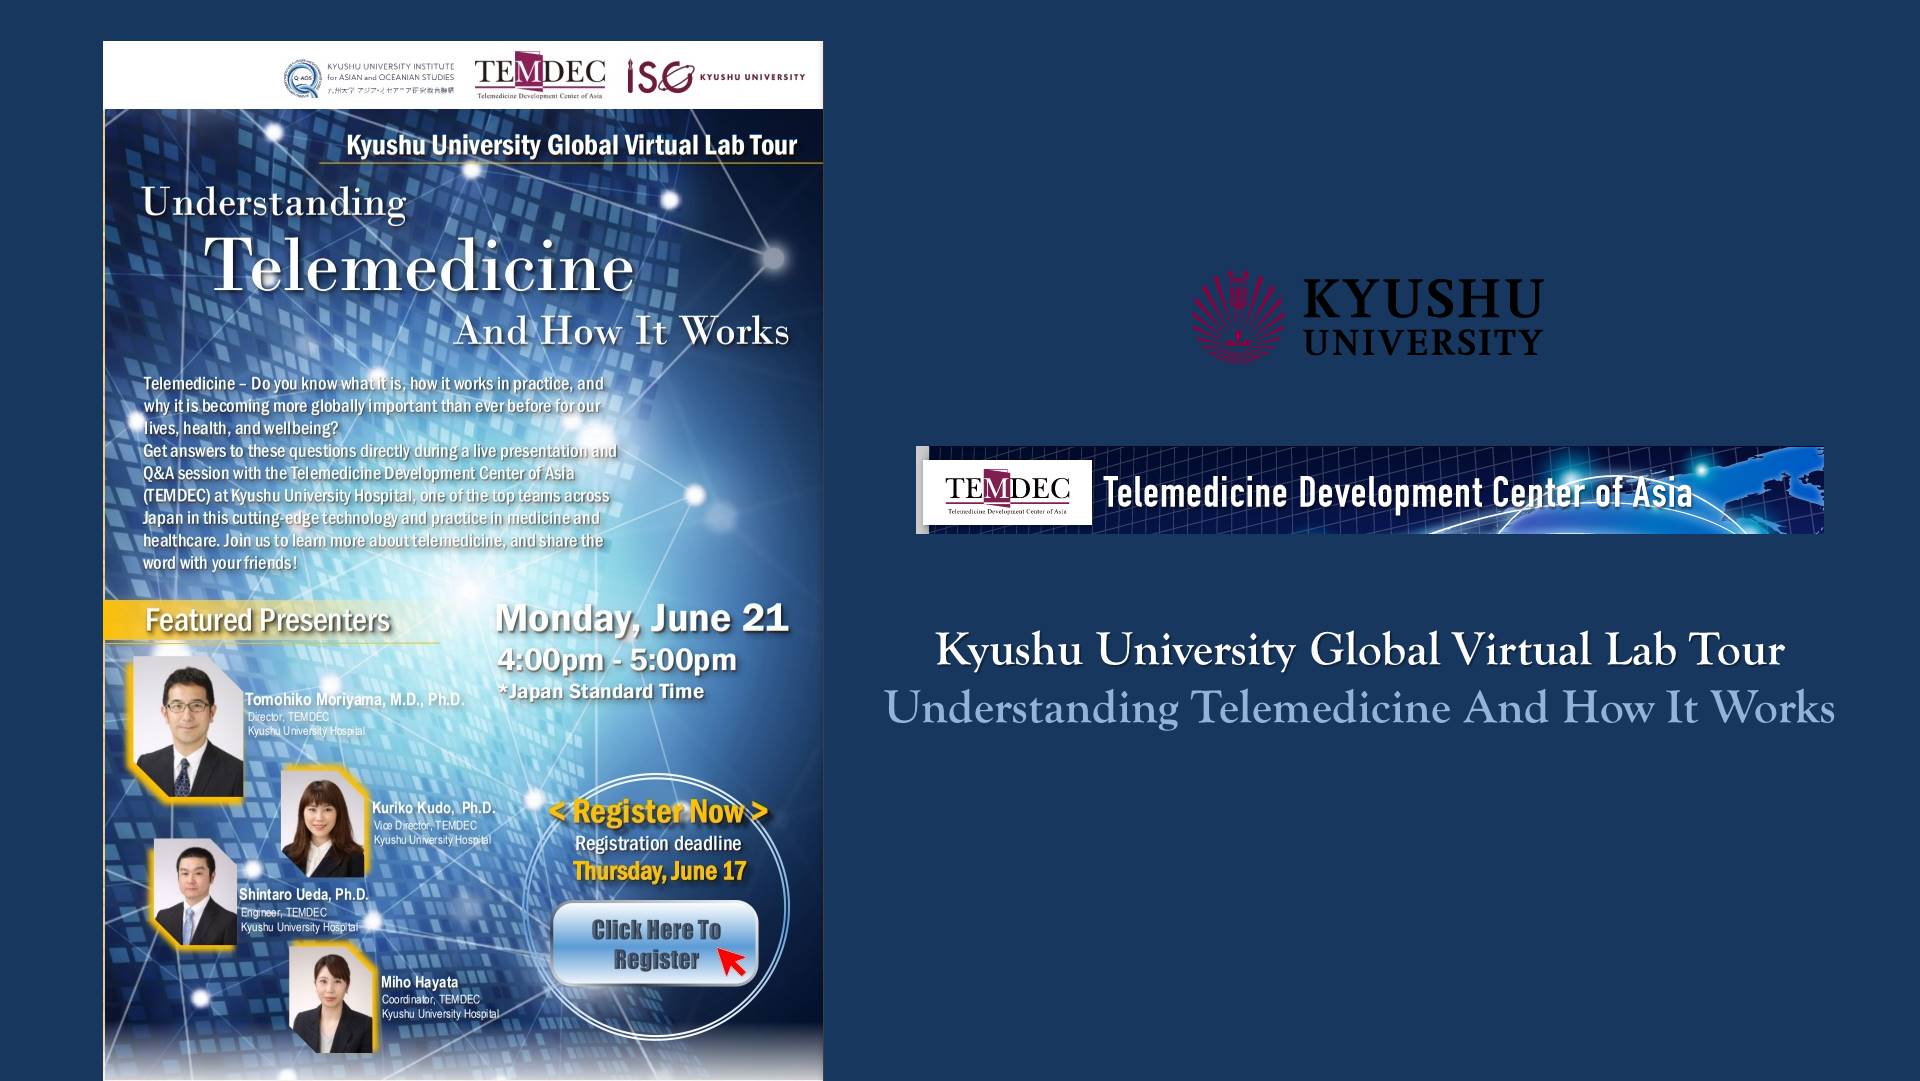 Kyushu University Global Virtual Lab Tour